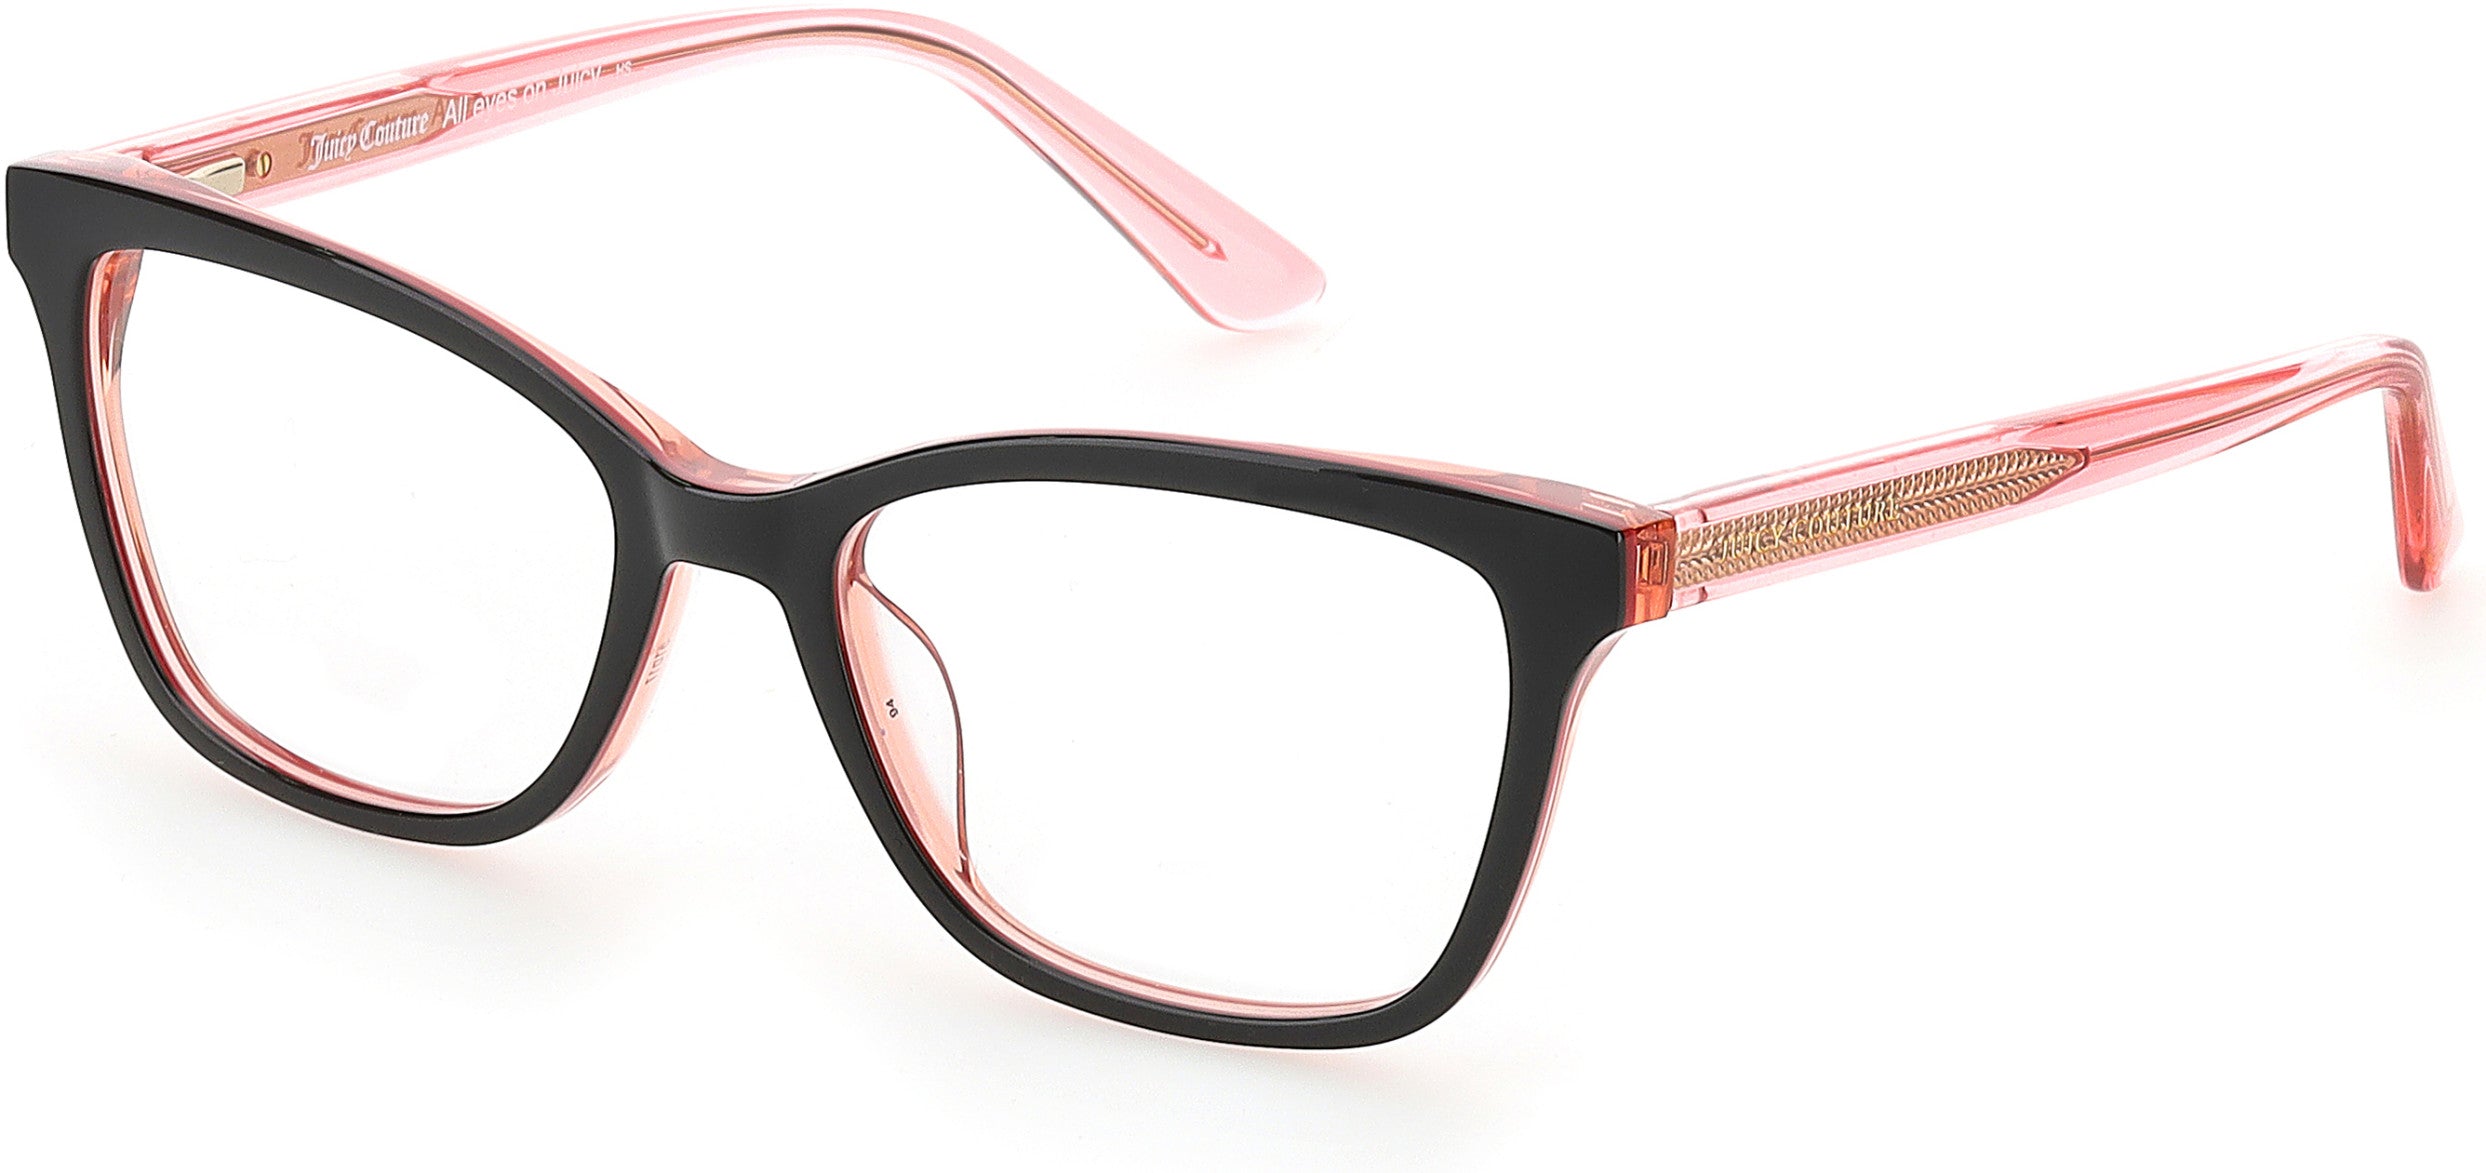 Juicy Couture Juicy 202 Rectangular Eyeglasses 03H2-03H2  Black Pink (00 Demo Lens)